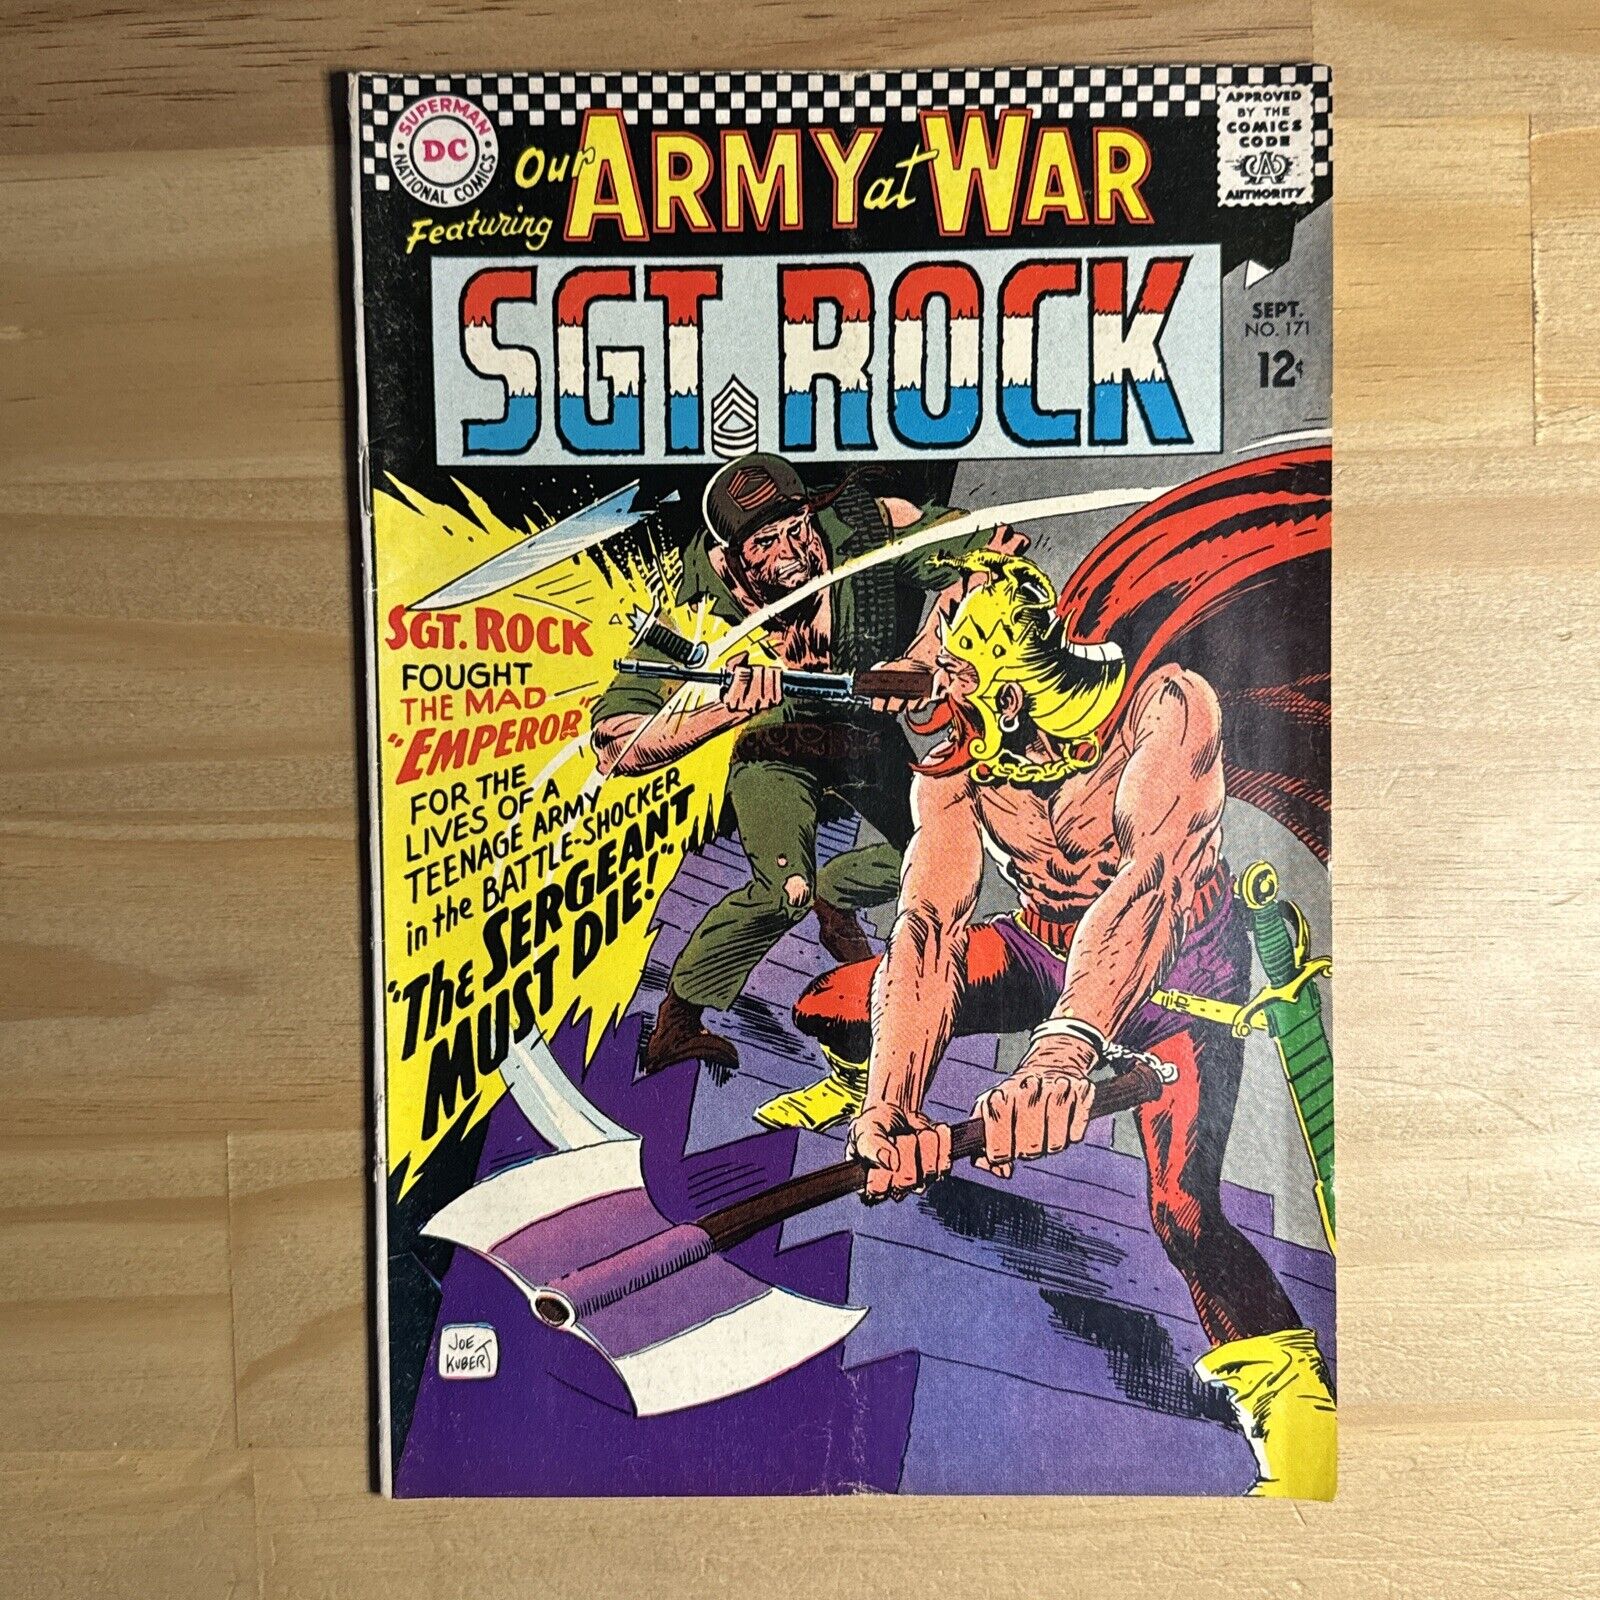 Our Army At War #171 (1966) DC Comics Featuring Sgt. Rock - Joe kubert Cover Art